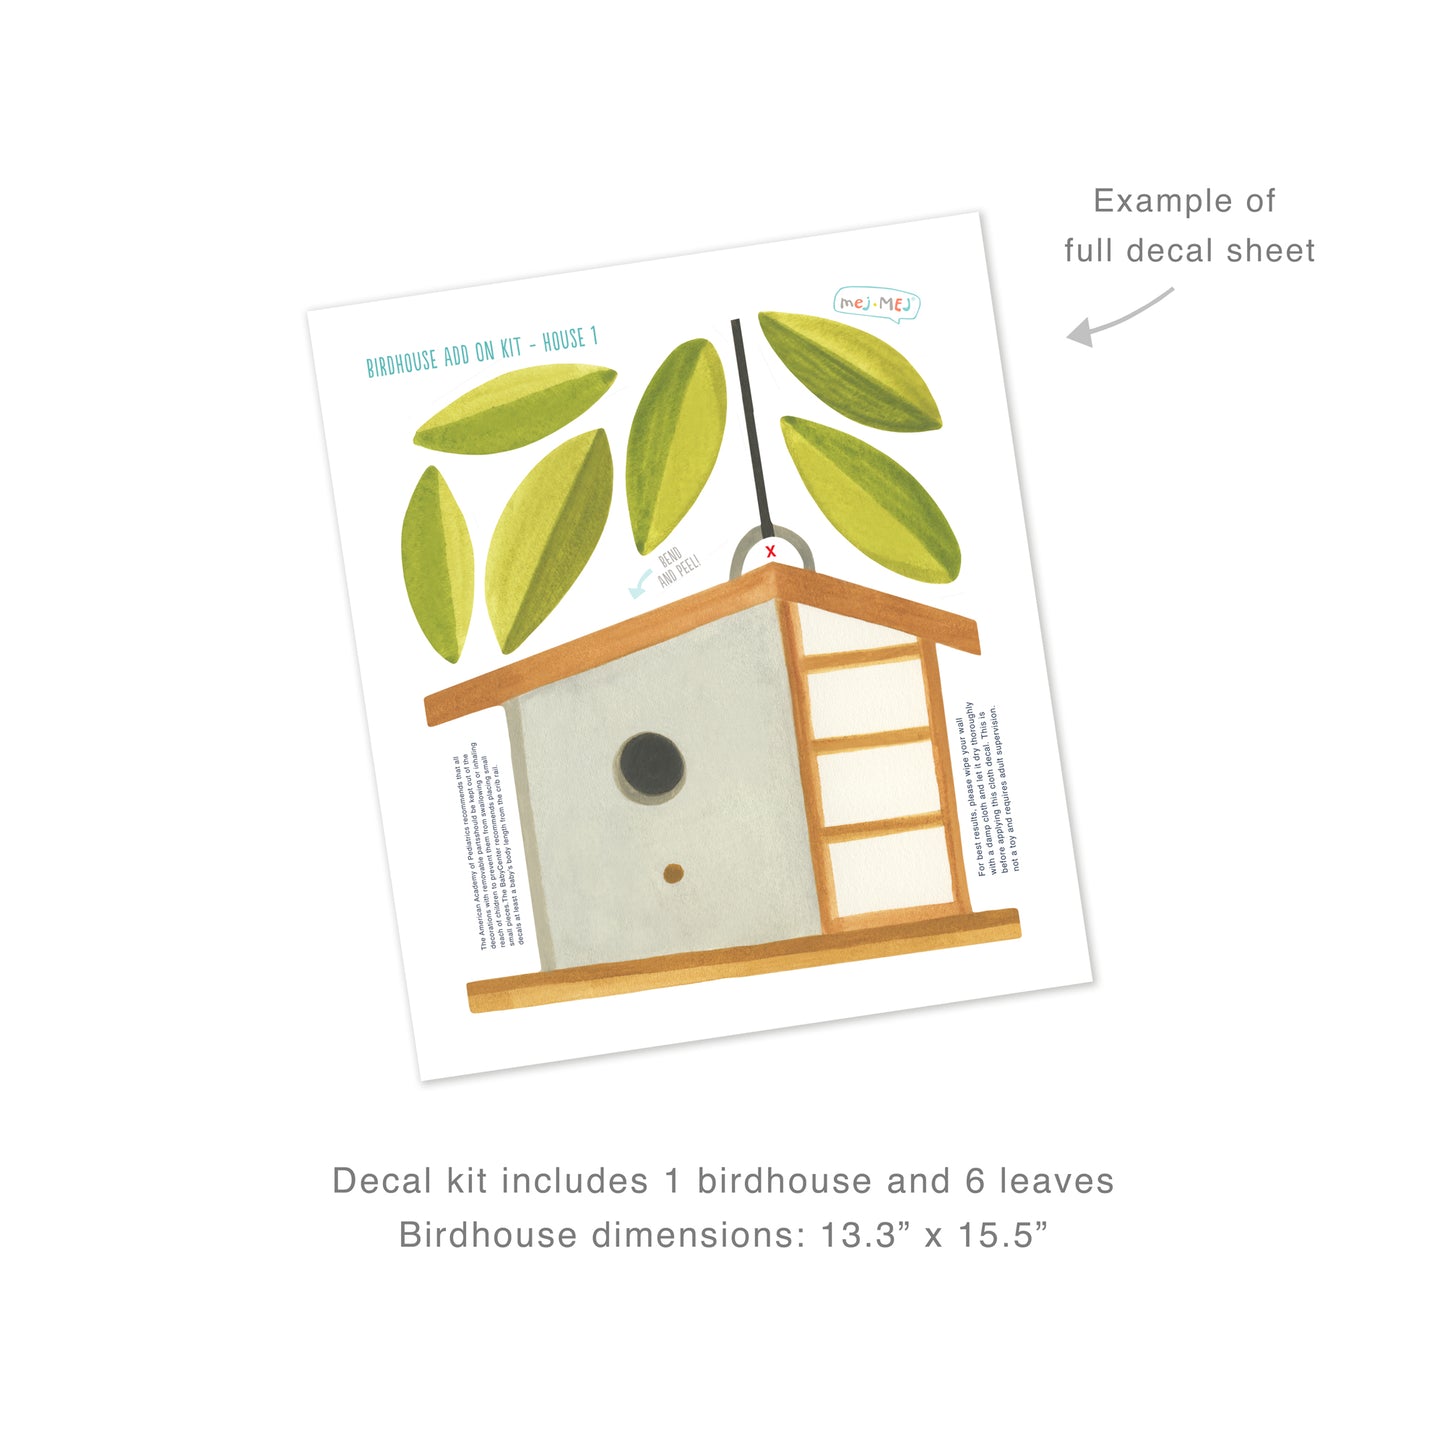 Birdhouse Add On Kit - House 1